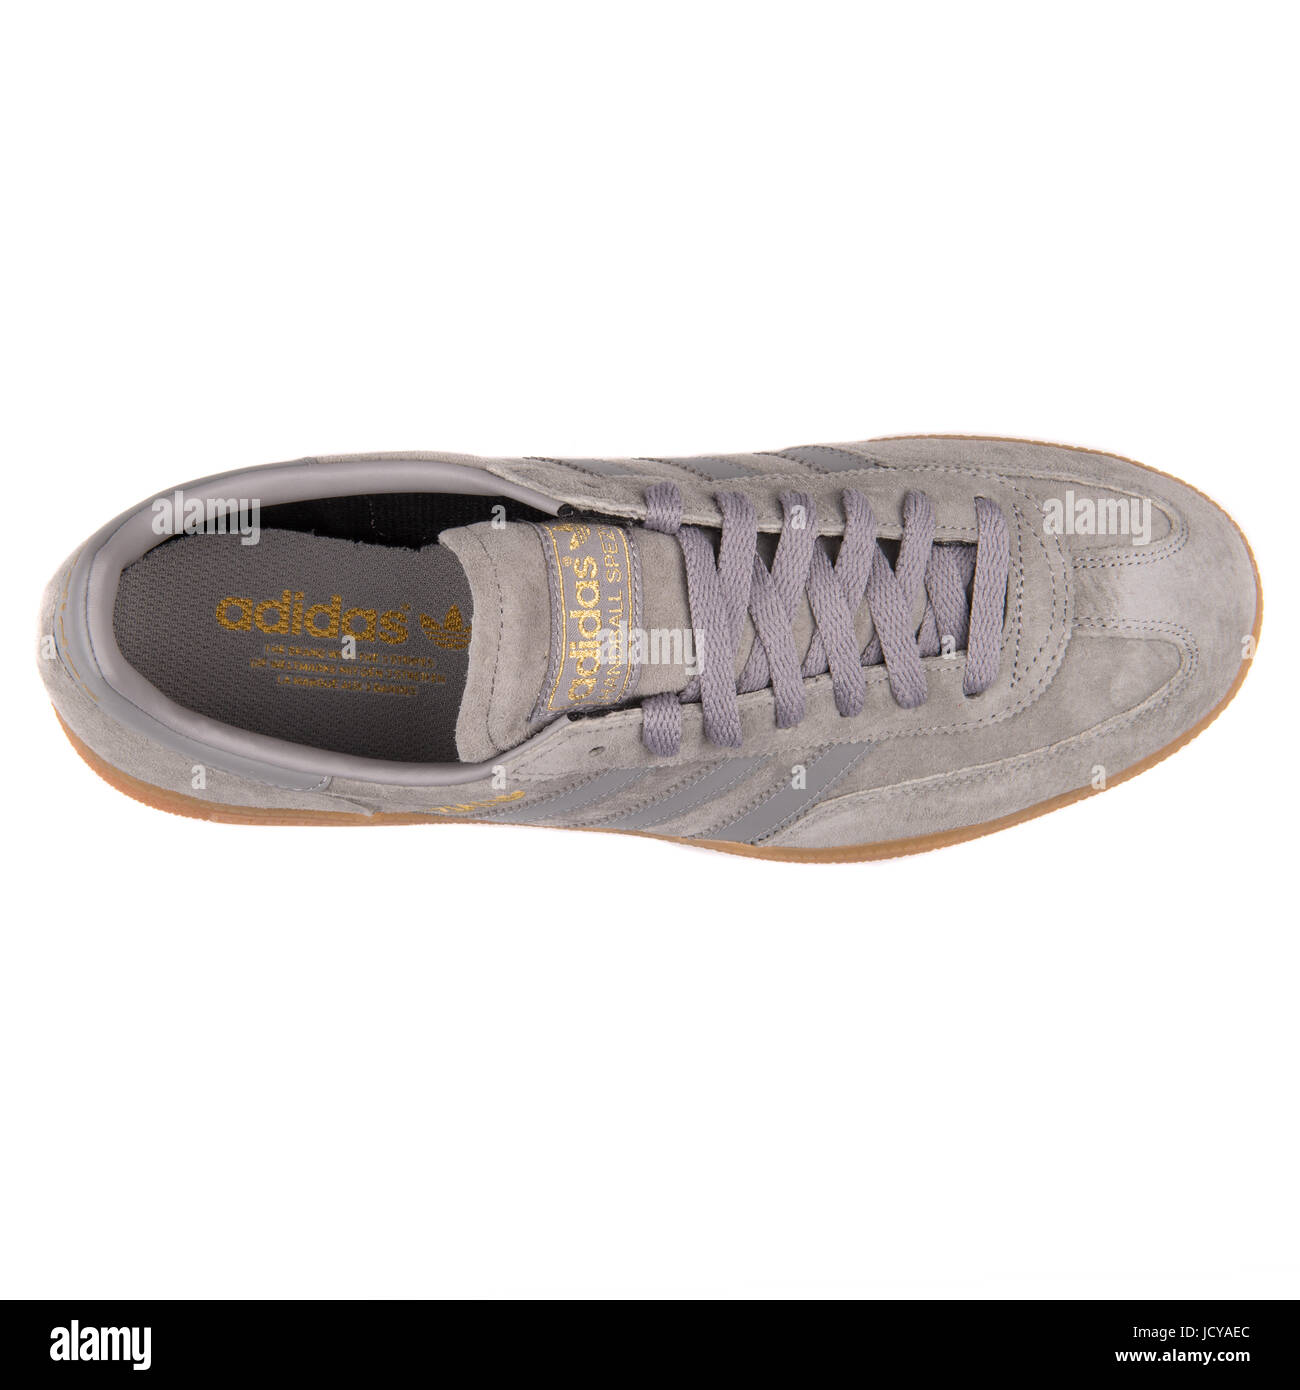 Adidas Spezial grigio uomo Calzature sportive - B35207 Foto stock - Alamy